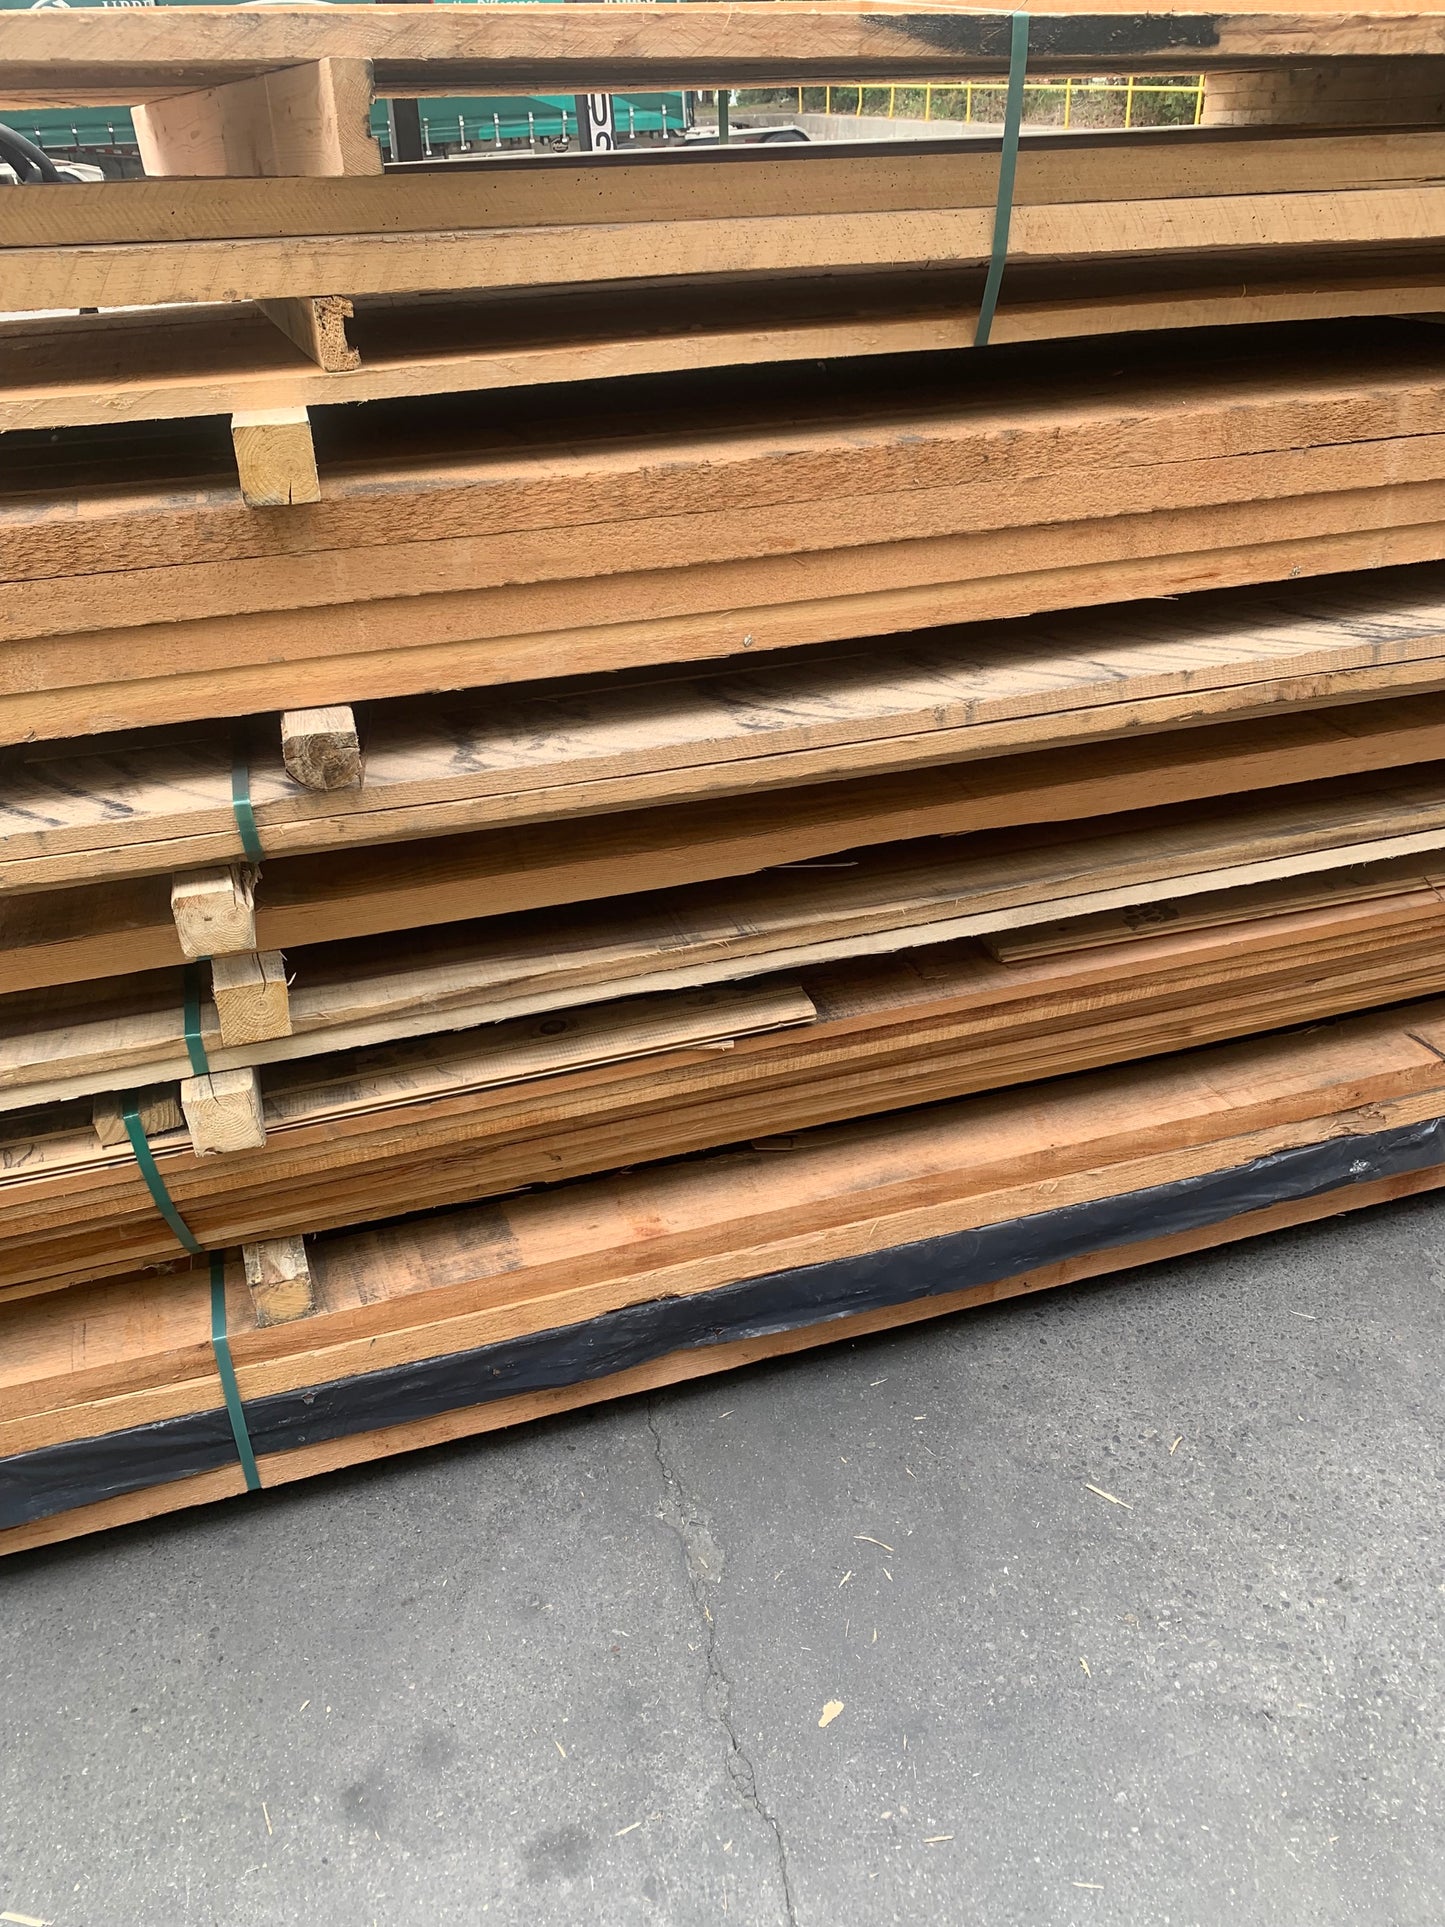 Mixed Lumber & Panels